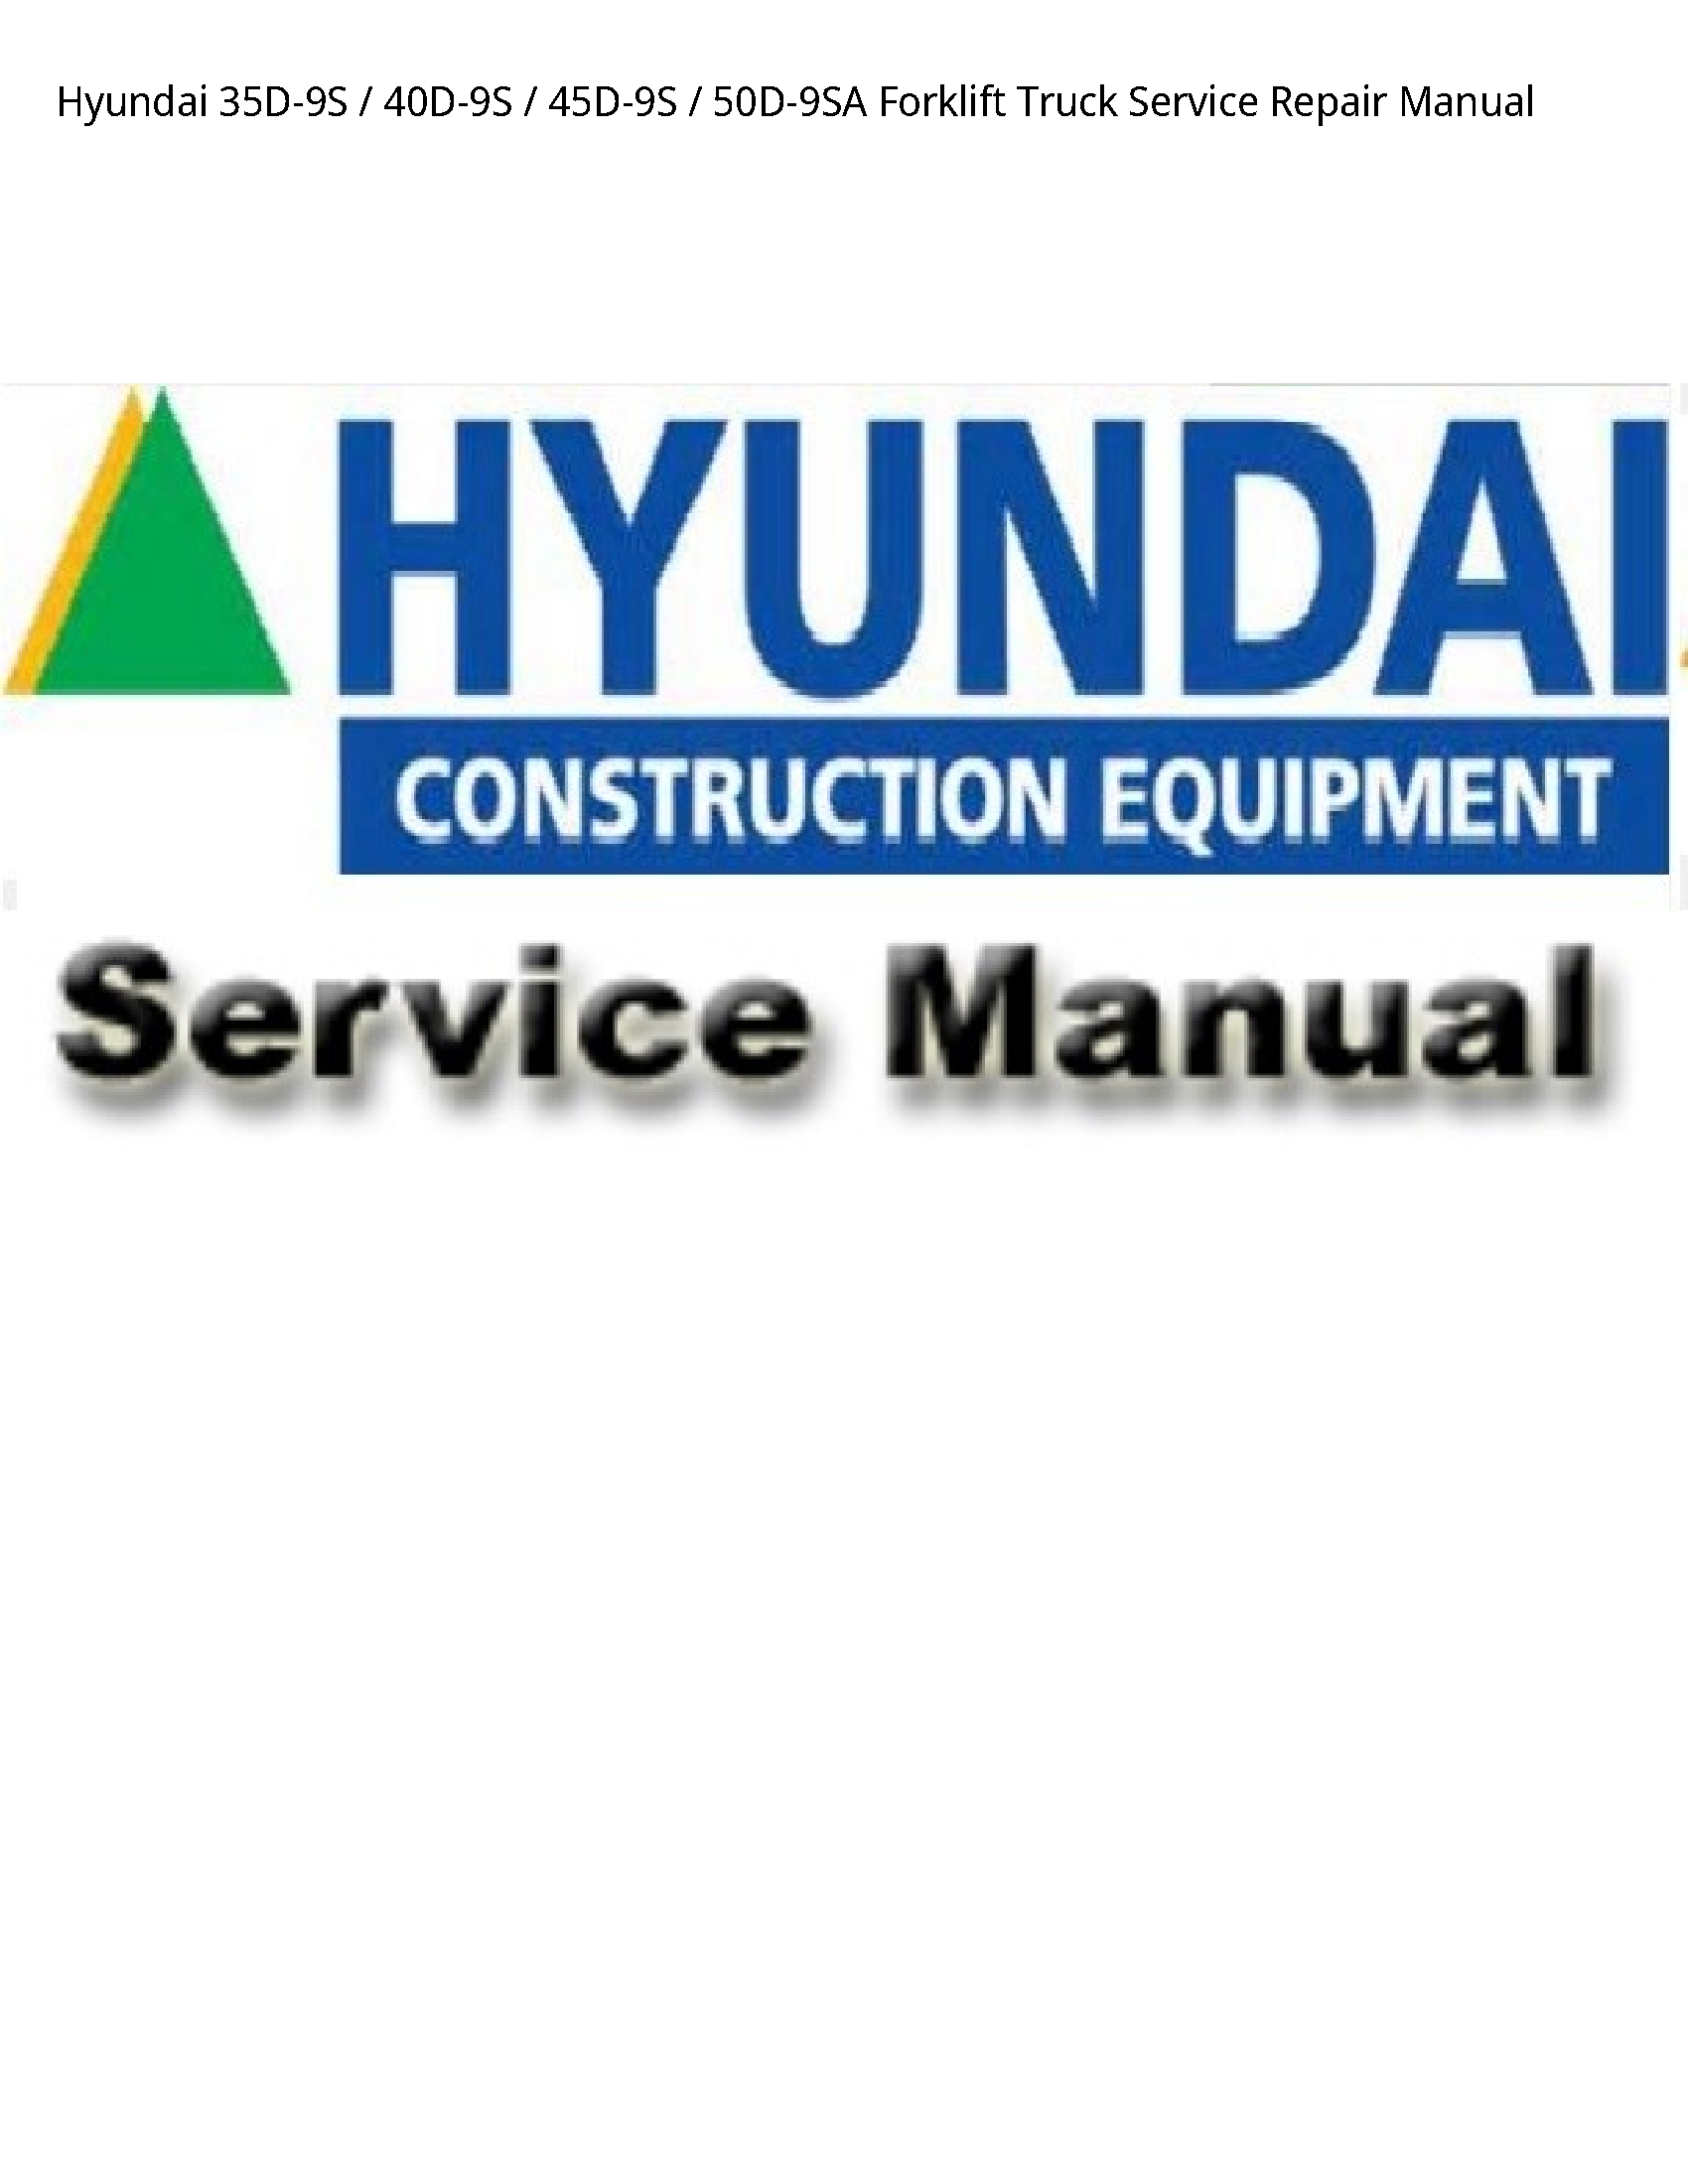 Hyundai 35D-9S Forklift Truck manual